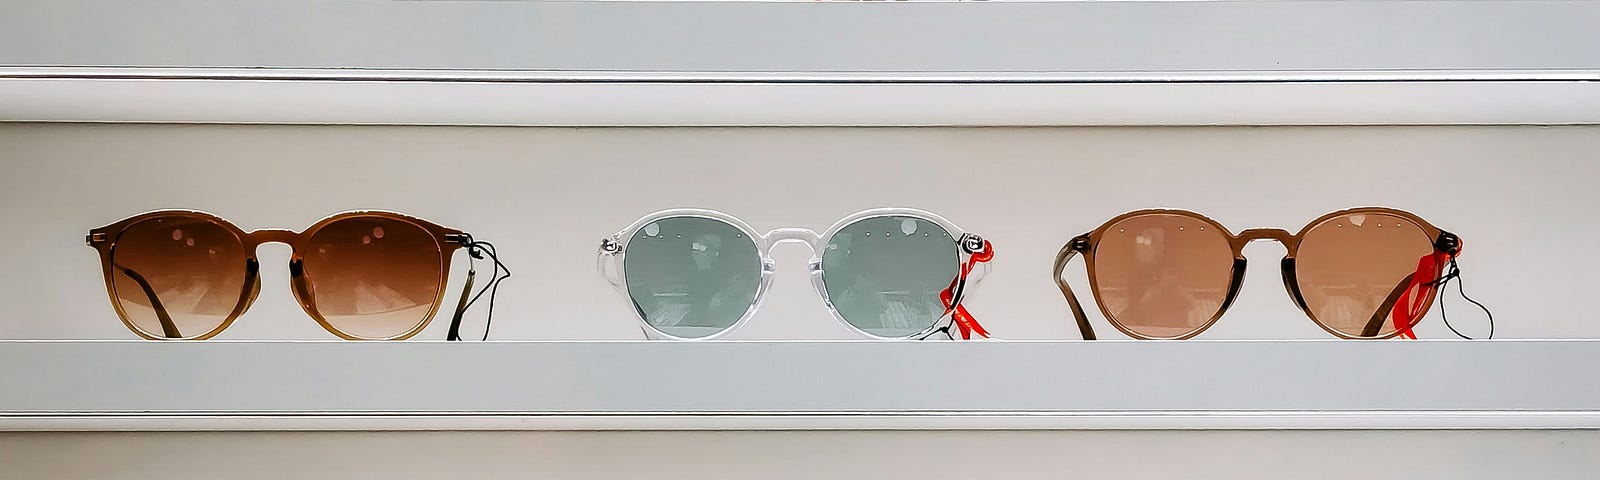 Sunglasses on a wall display